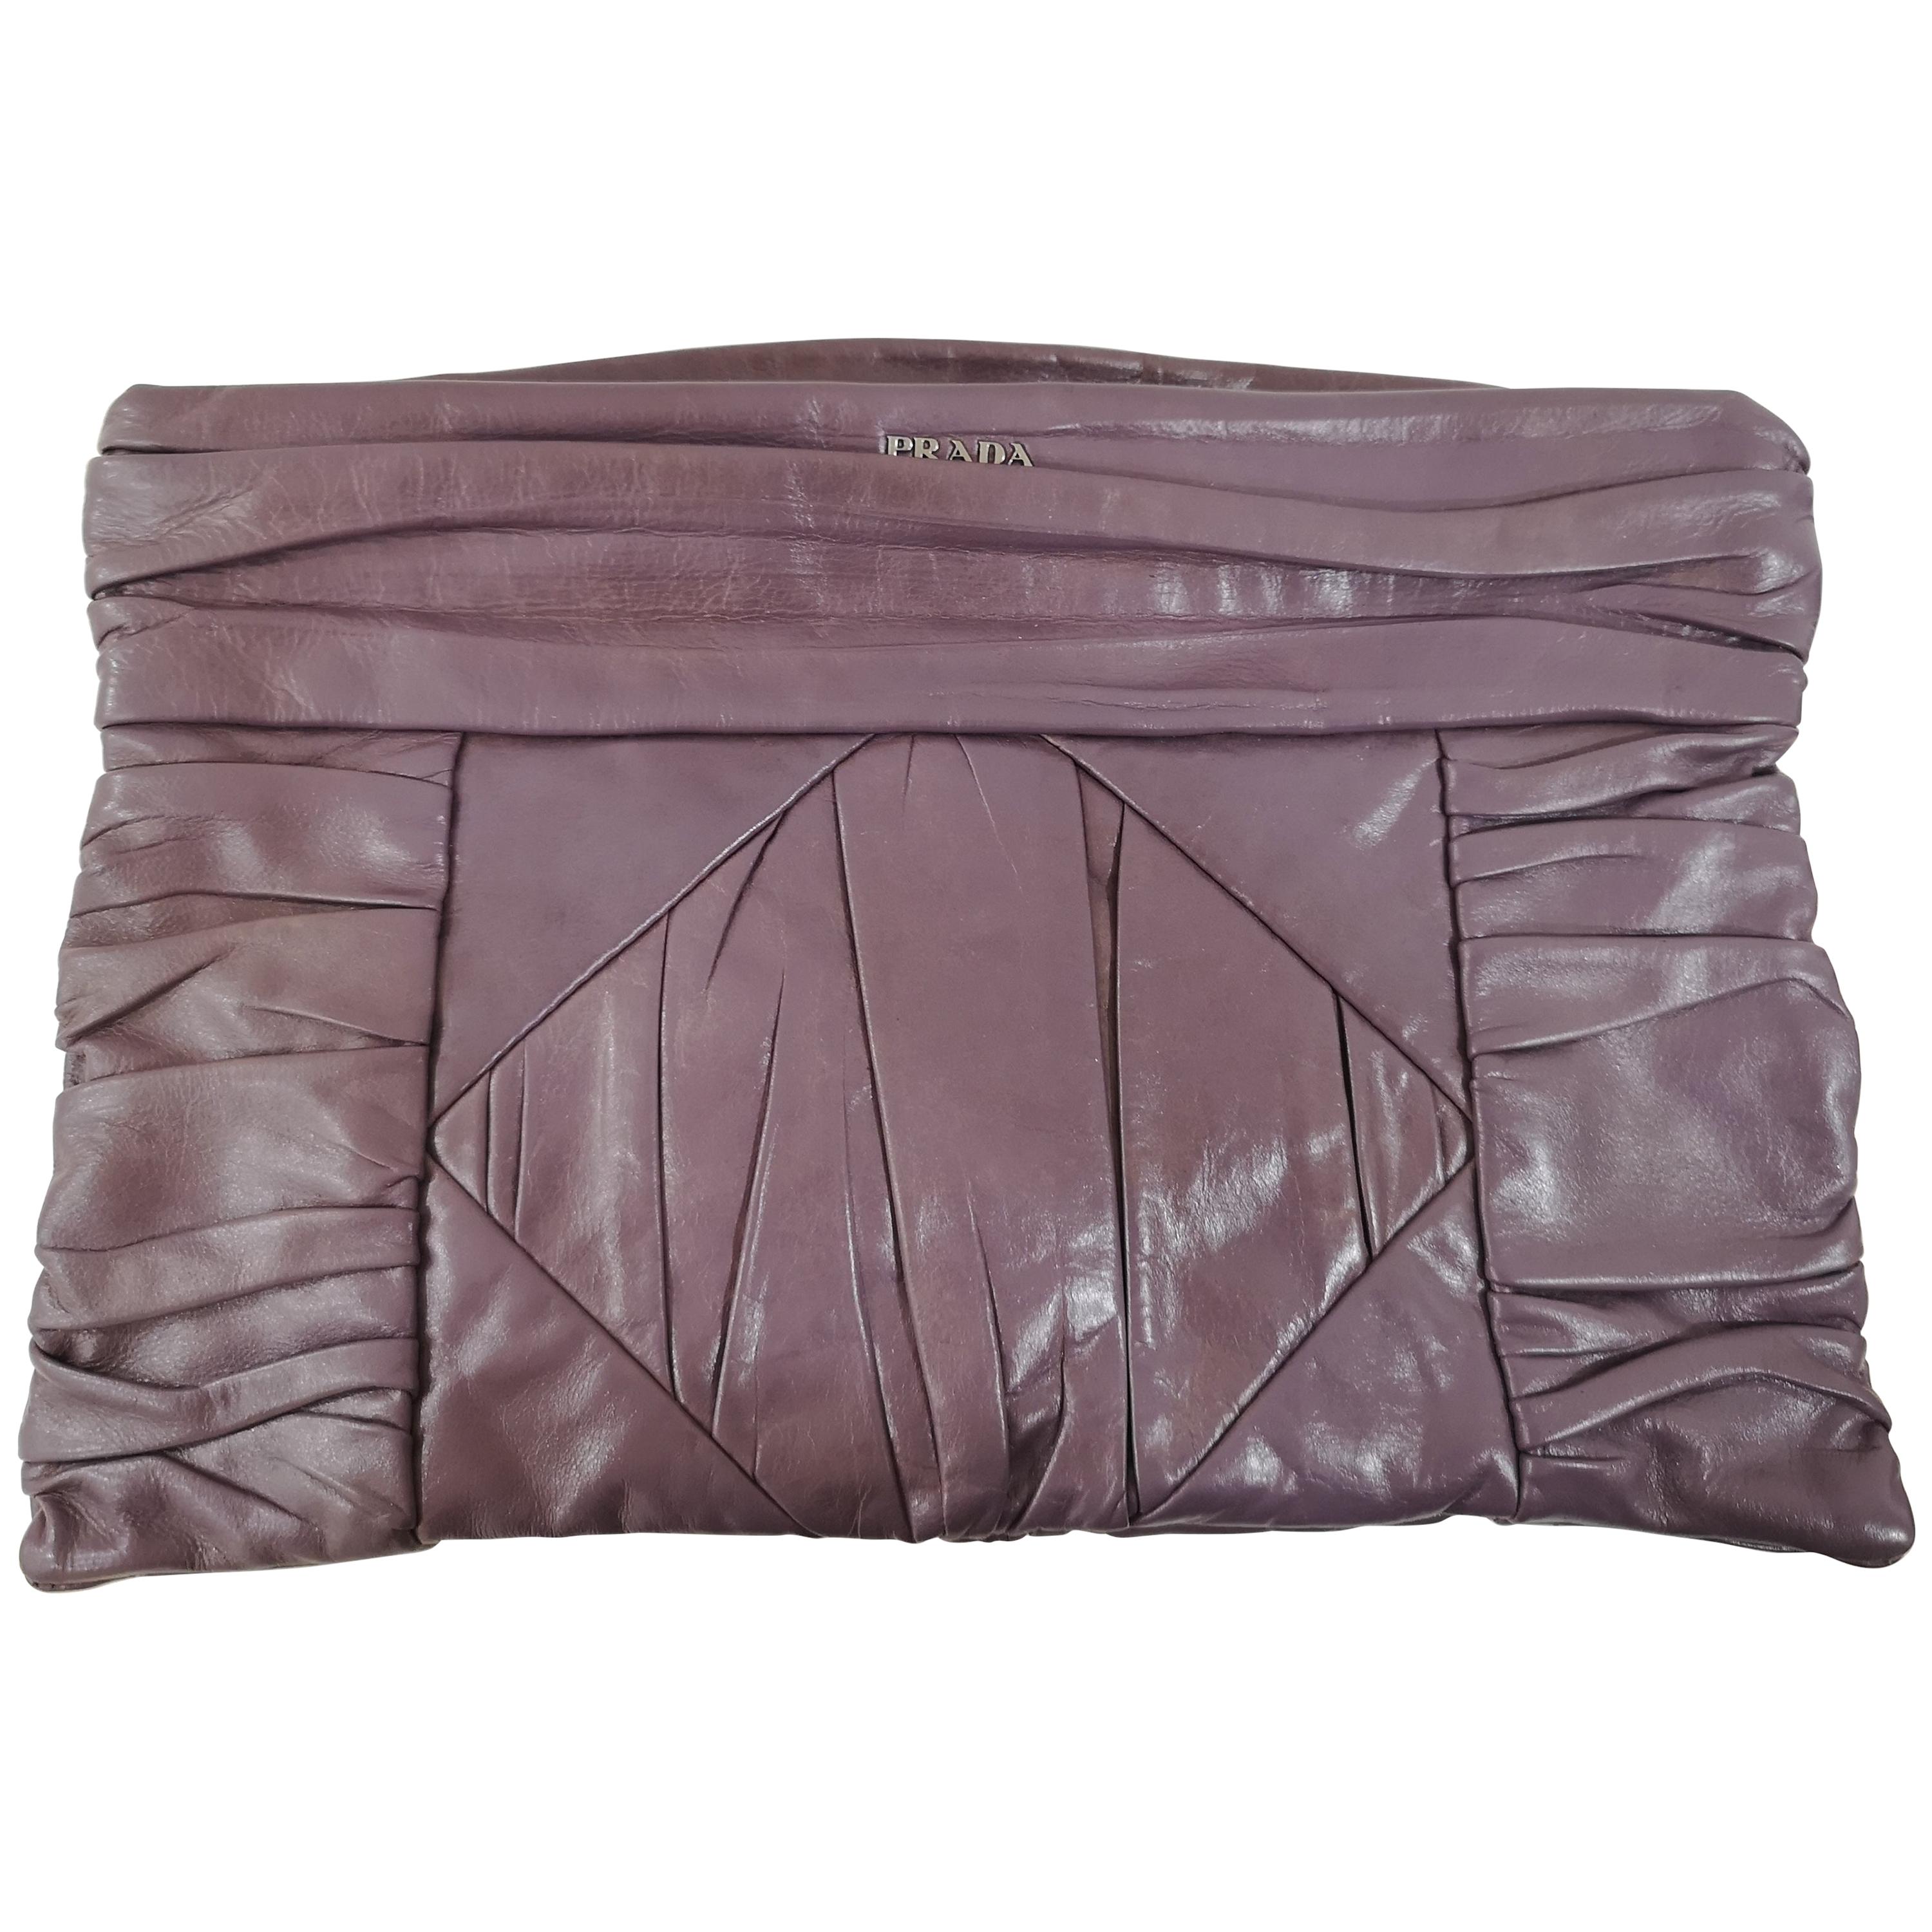 Prada purple leather handbag